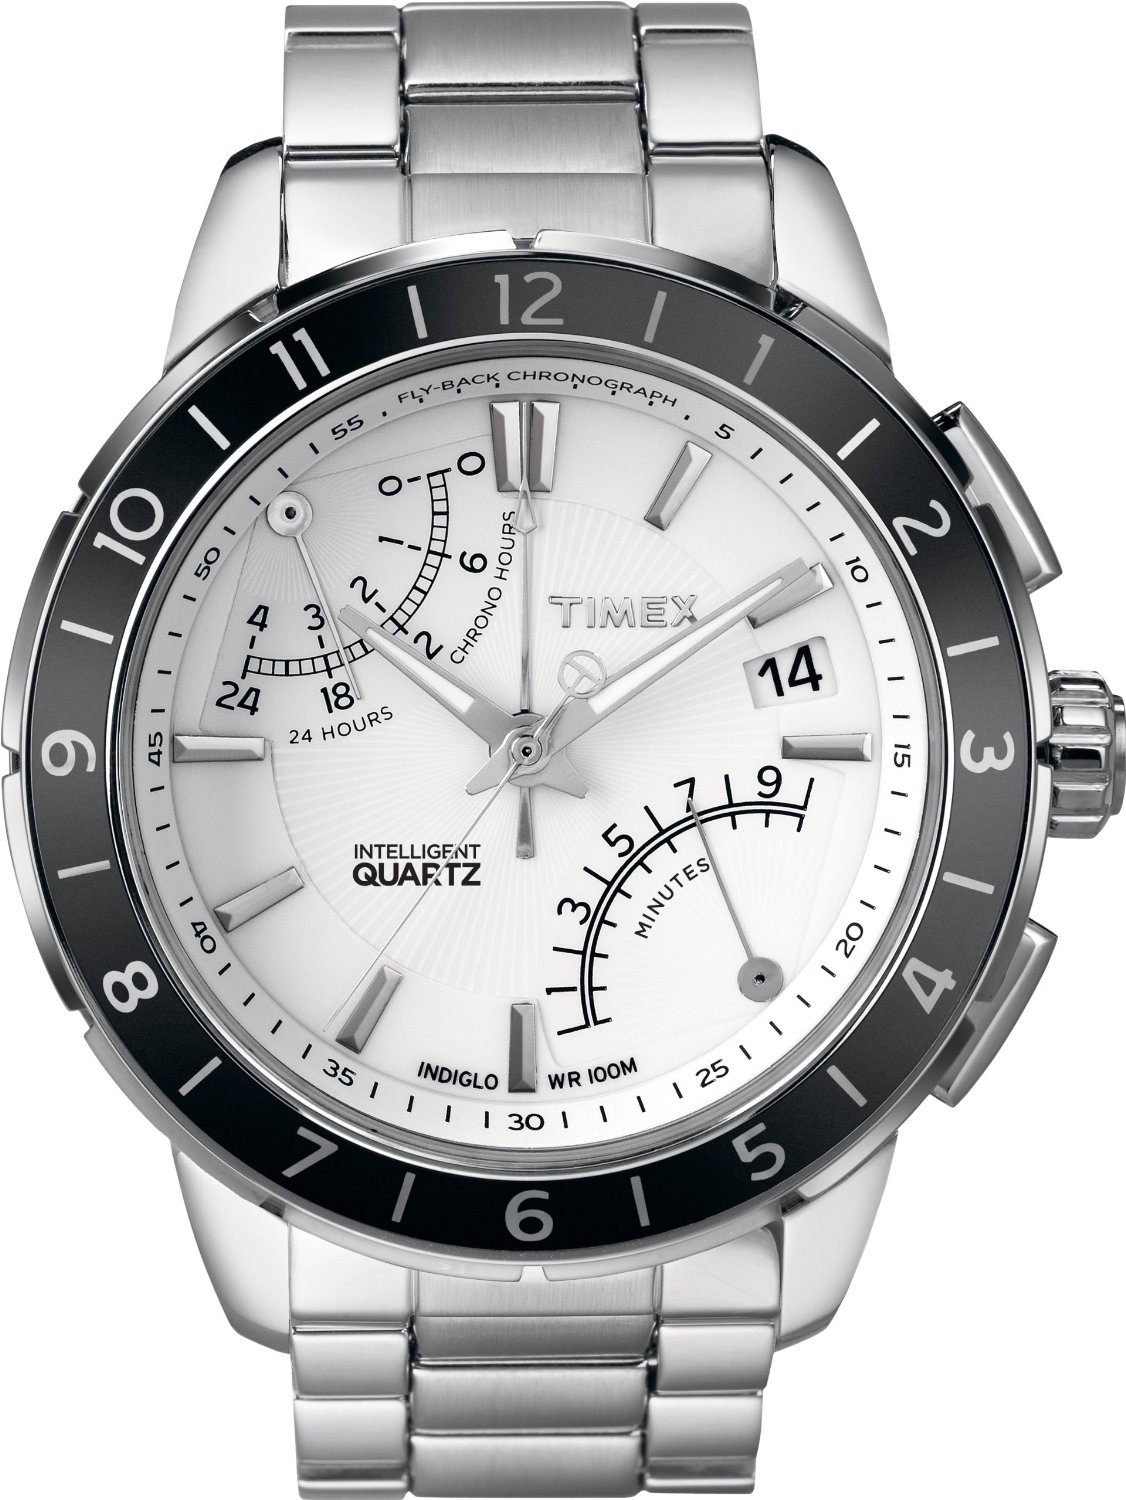 Timex Men's T2N499 Intelligent Quartz SL Series Fly-Back Chronograph White Dial Stainless Steel Bracelet Watch  $100.00(46%) 